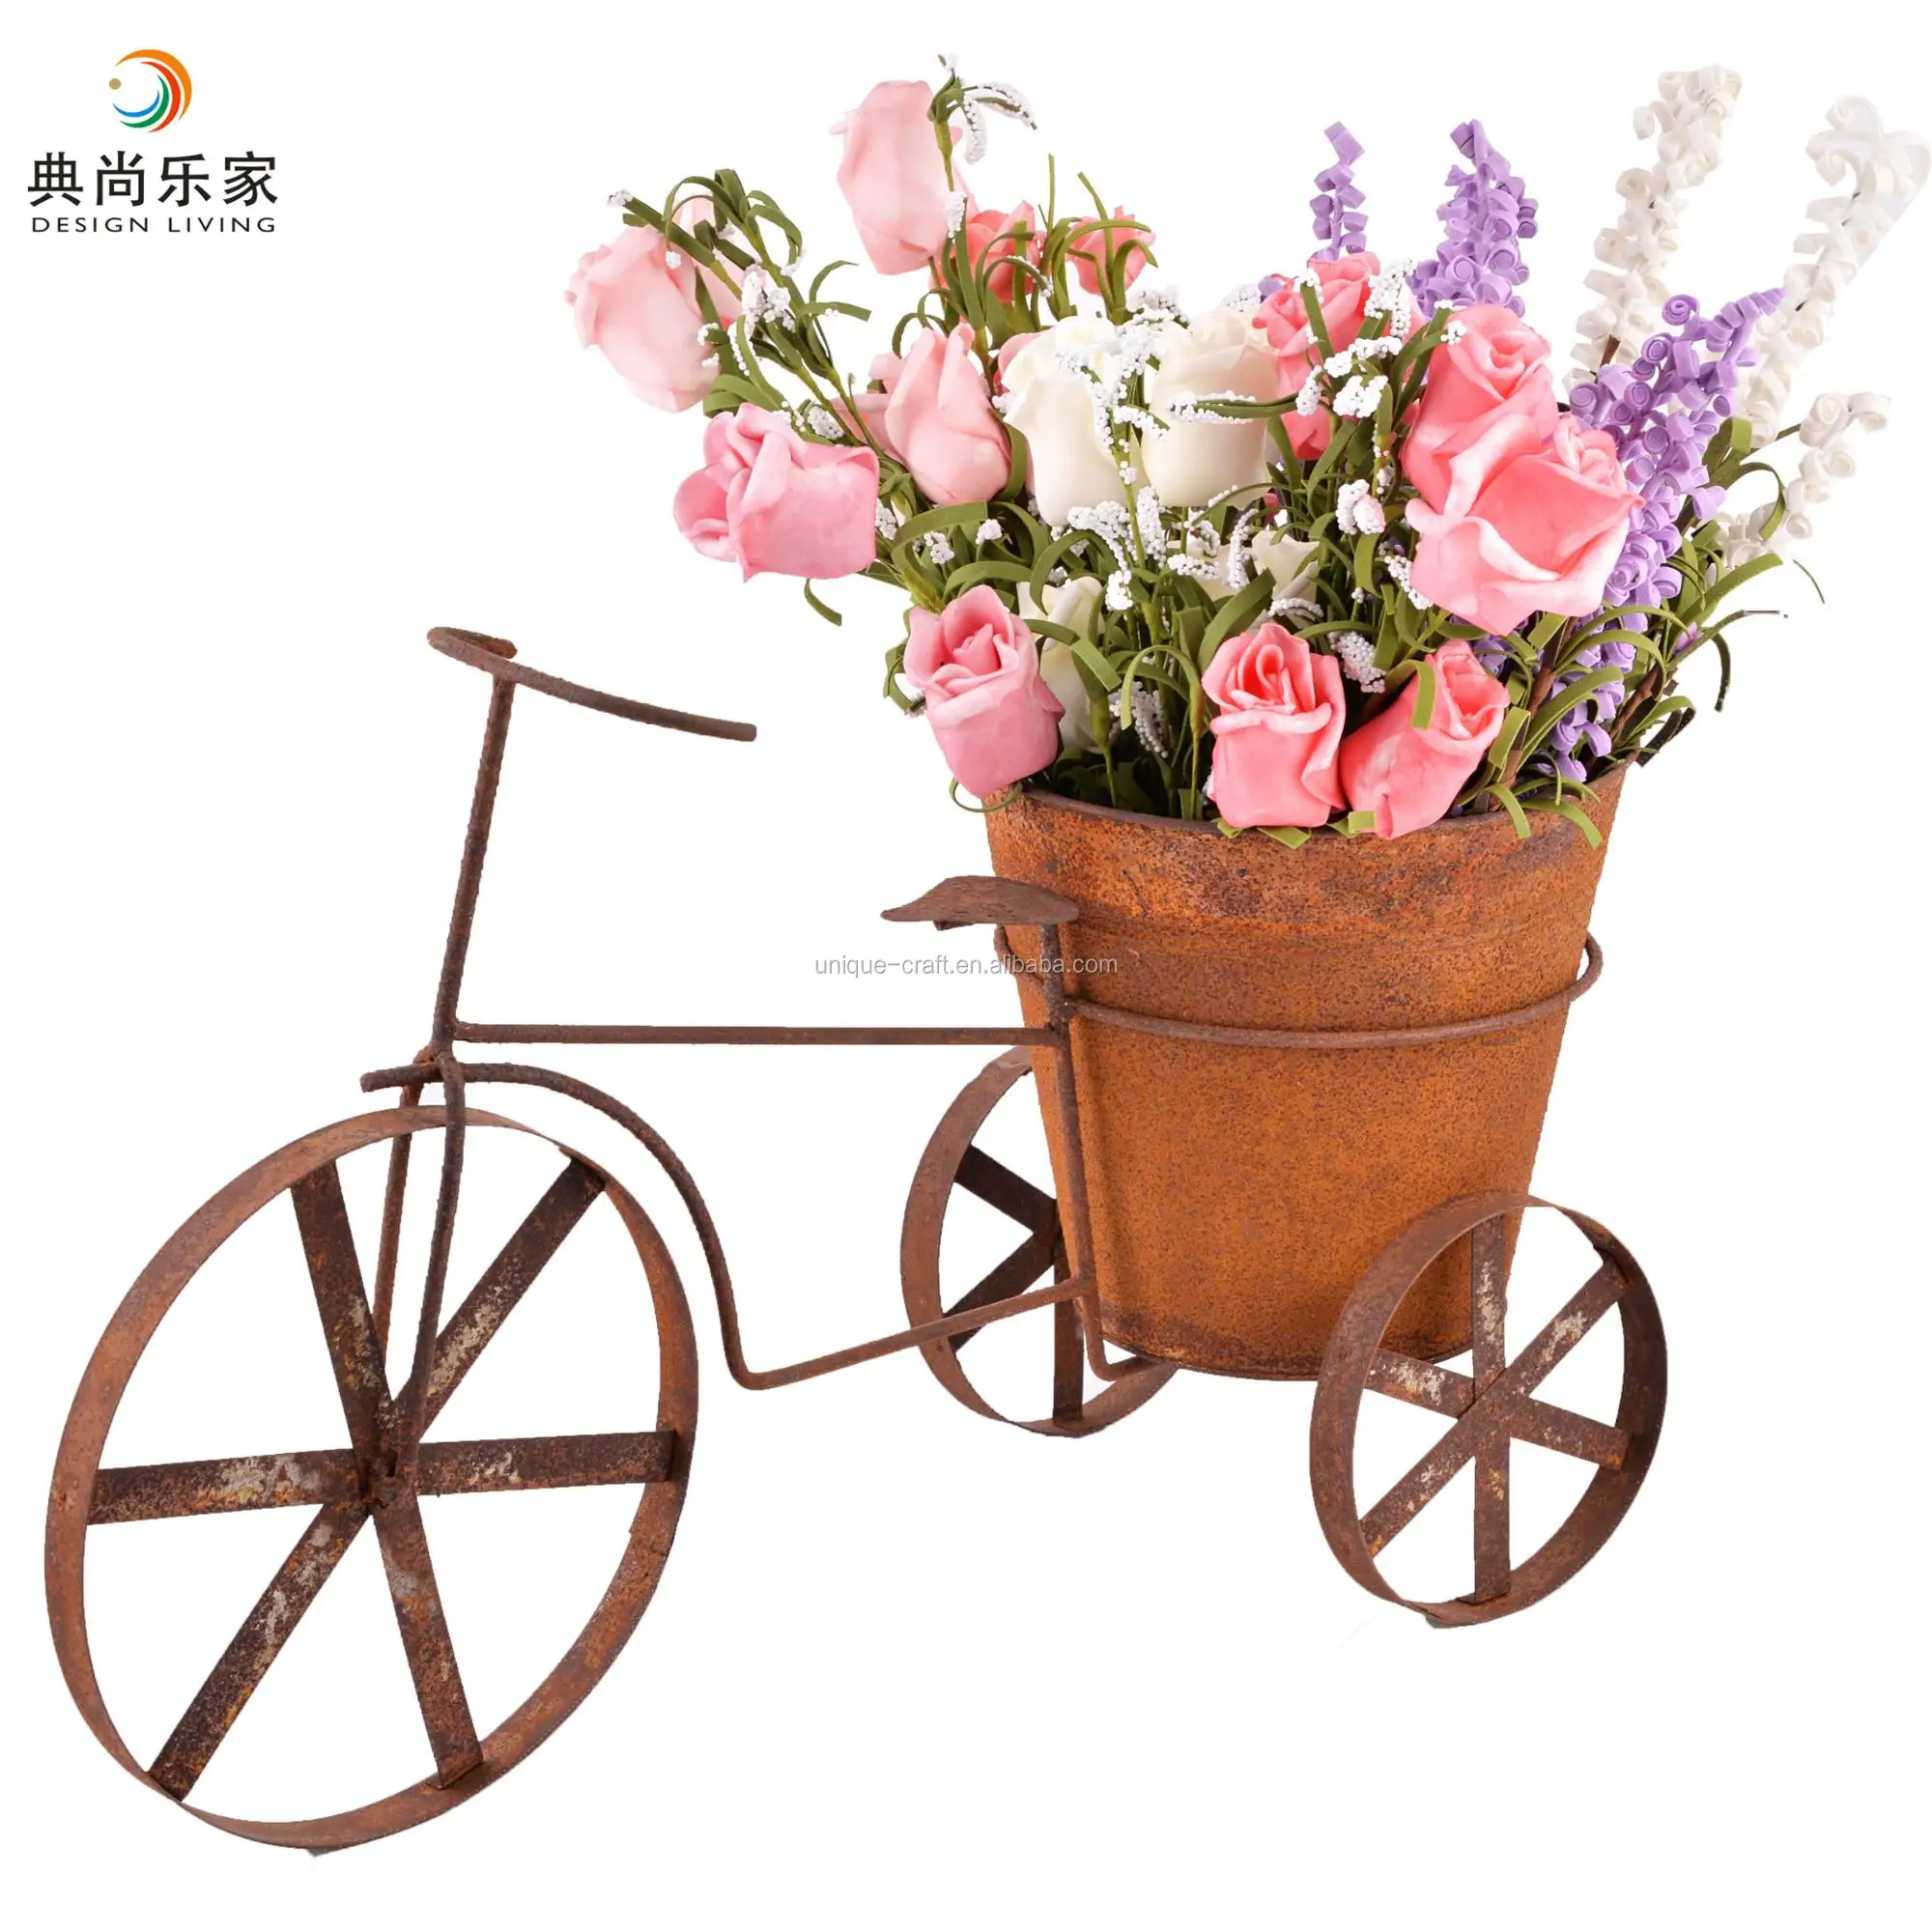 Antique Decorative Metal Bicycle Flower Pots Wholesale Perfect for Wedding Table Centerpiece